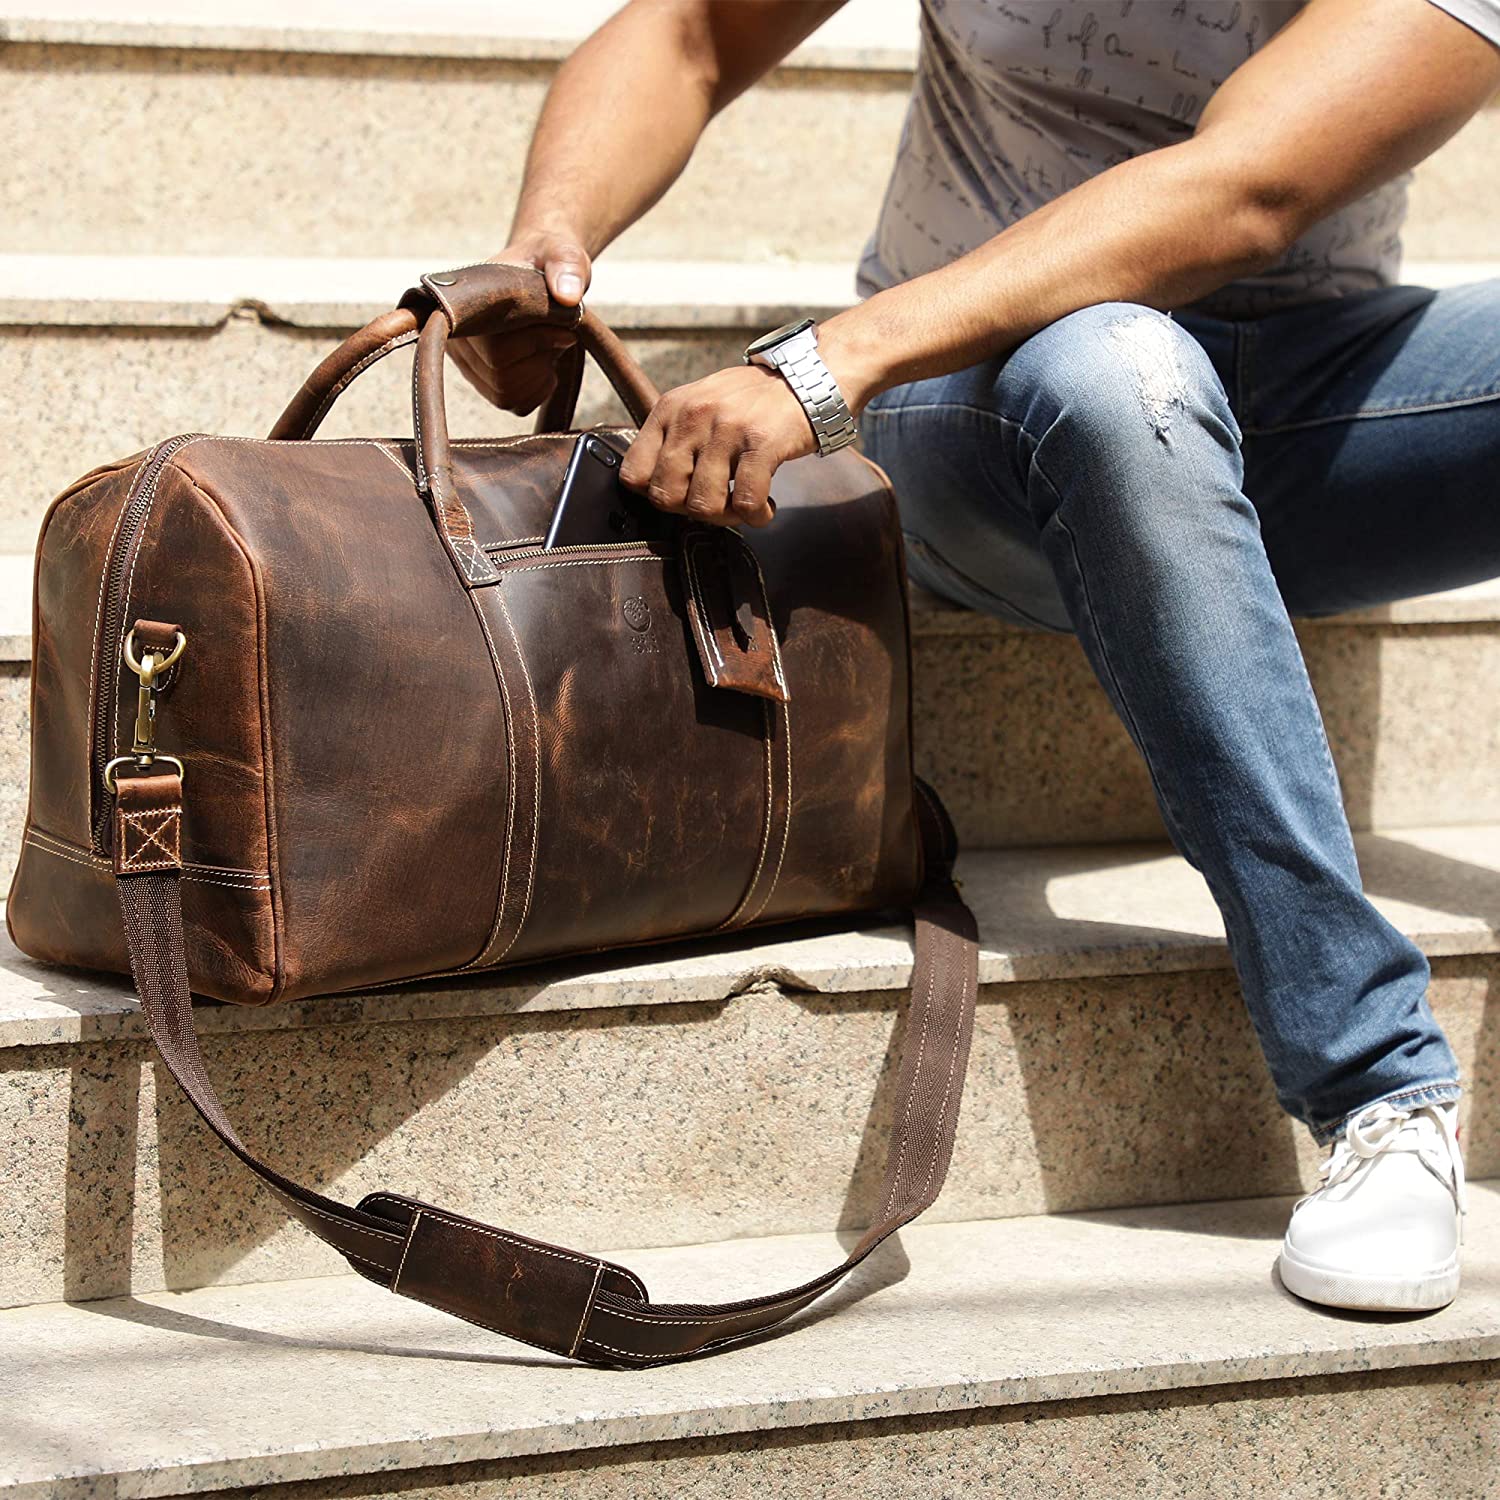 Handmade Leather Carry On Bag Airplane Underseat Travel, Mulberry, Size Medium eBay